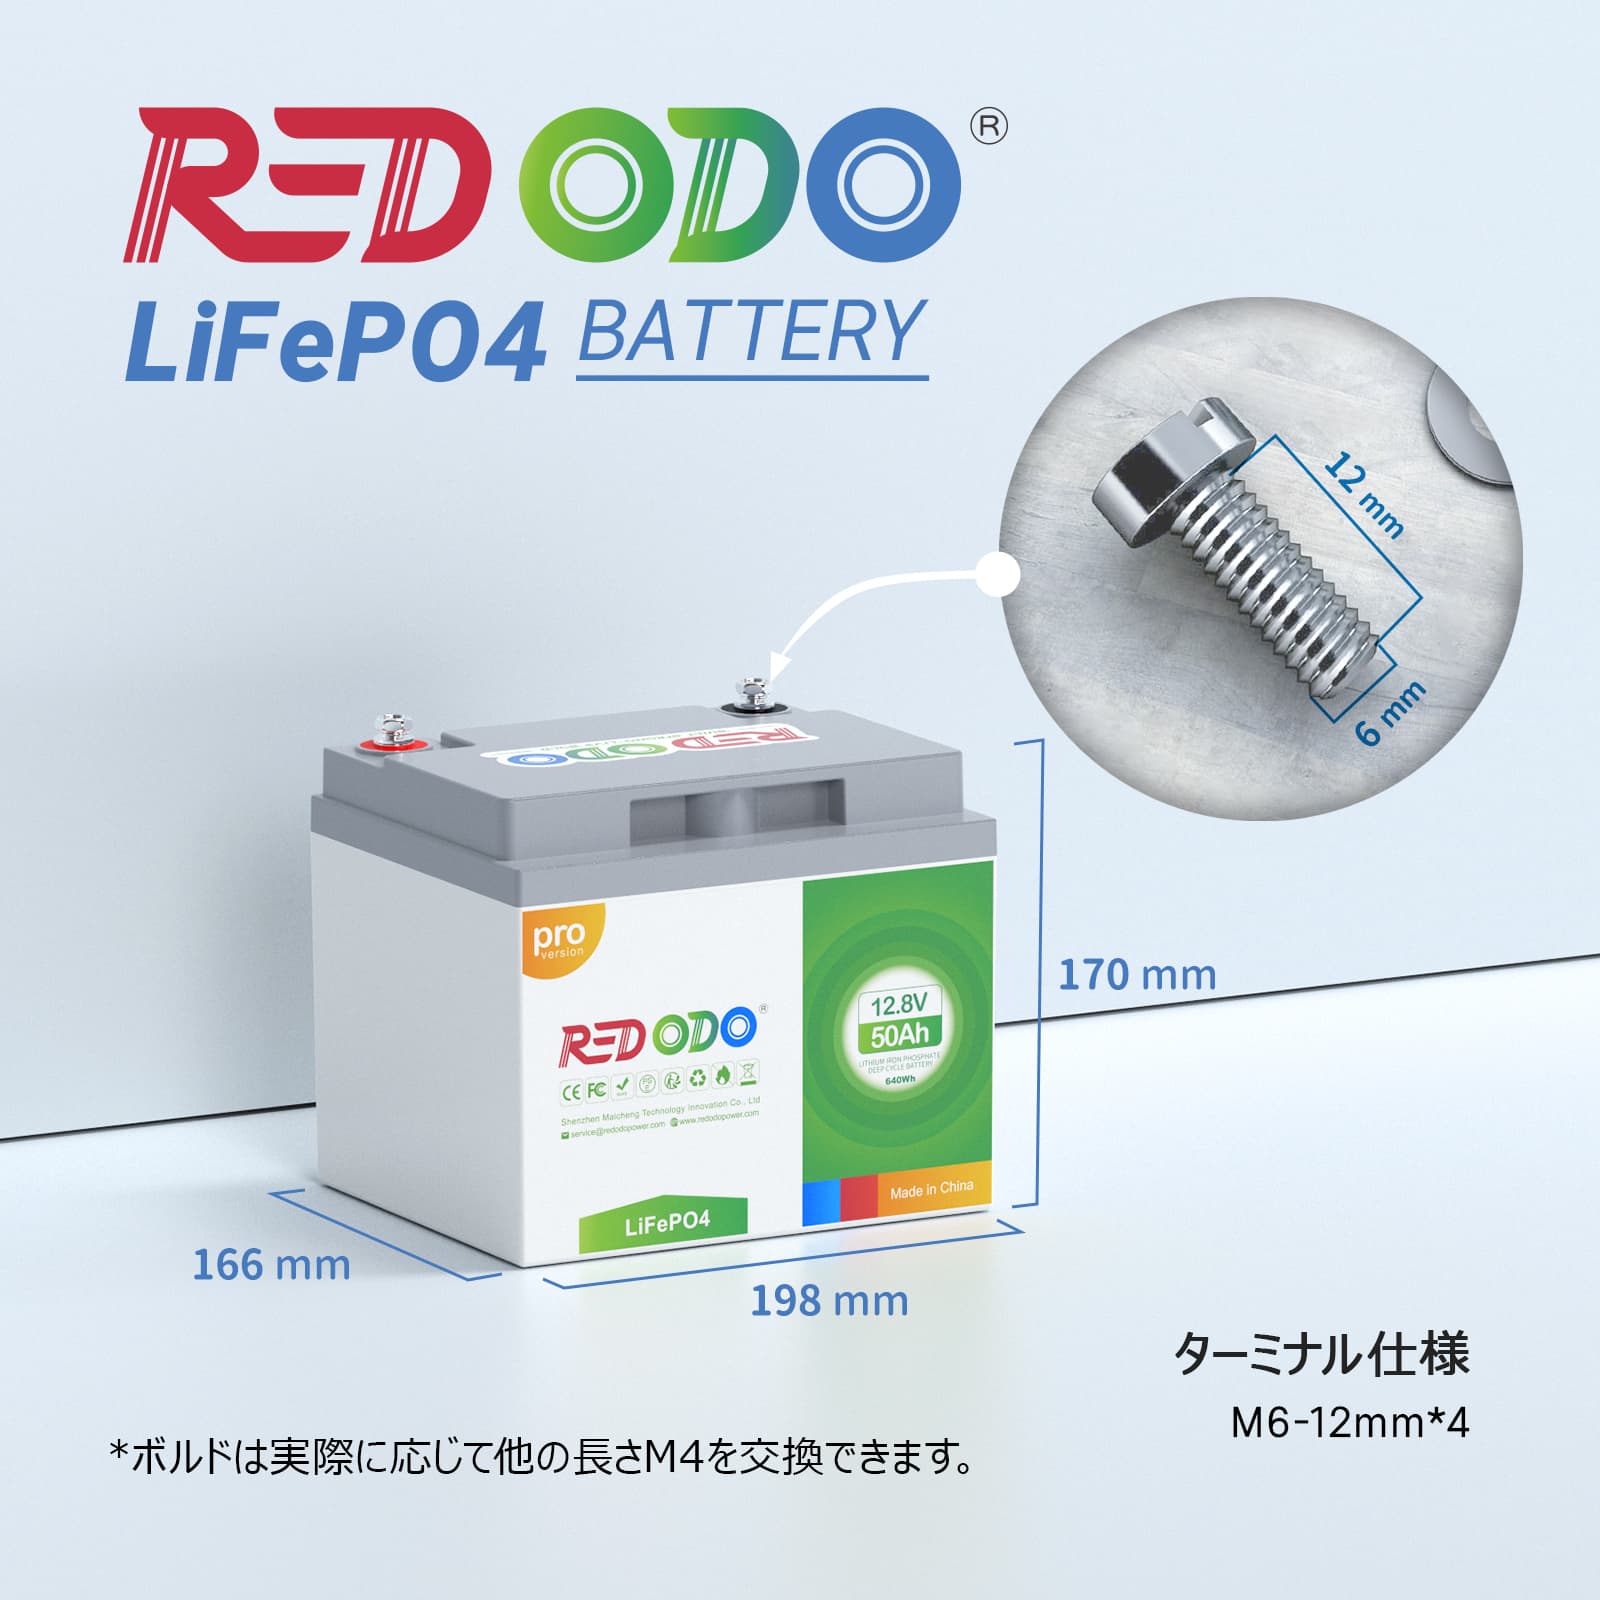 Redodo12V 50Ah Pro Lithium Iron Phosphate Battery